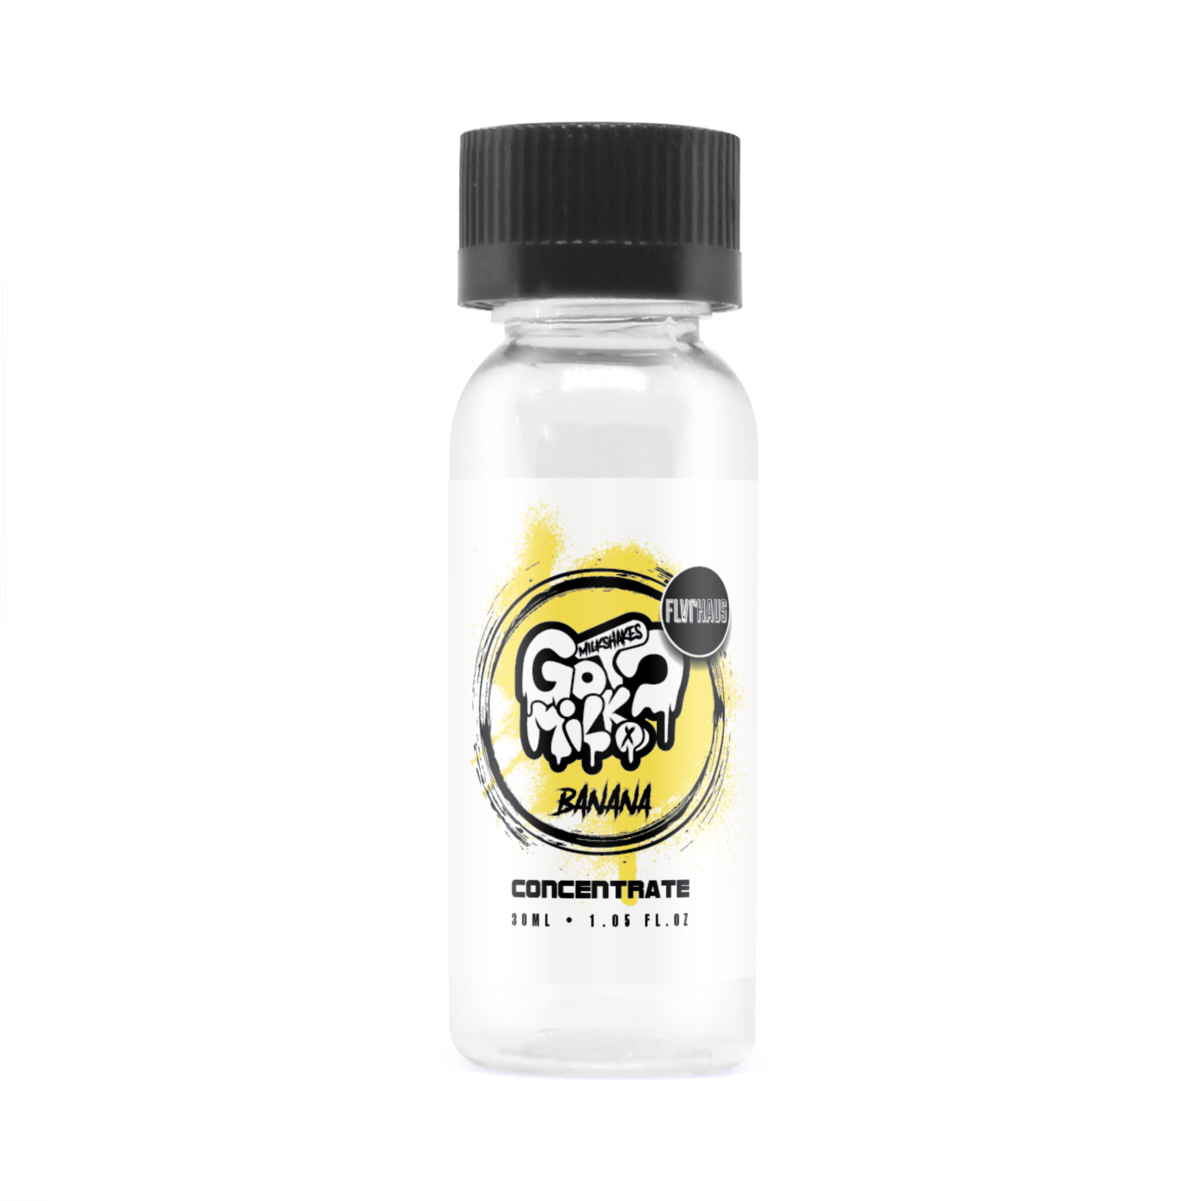 Banana Milkshake Concentrate E-Liquid by Got Milk 30ml